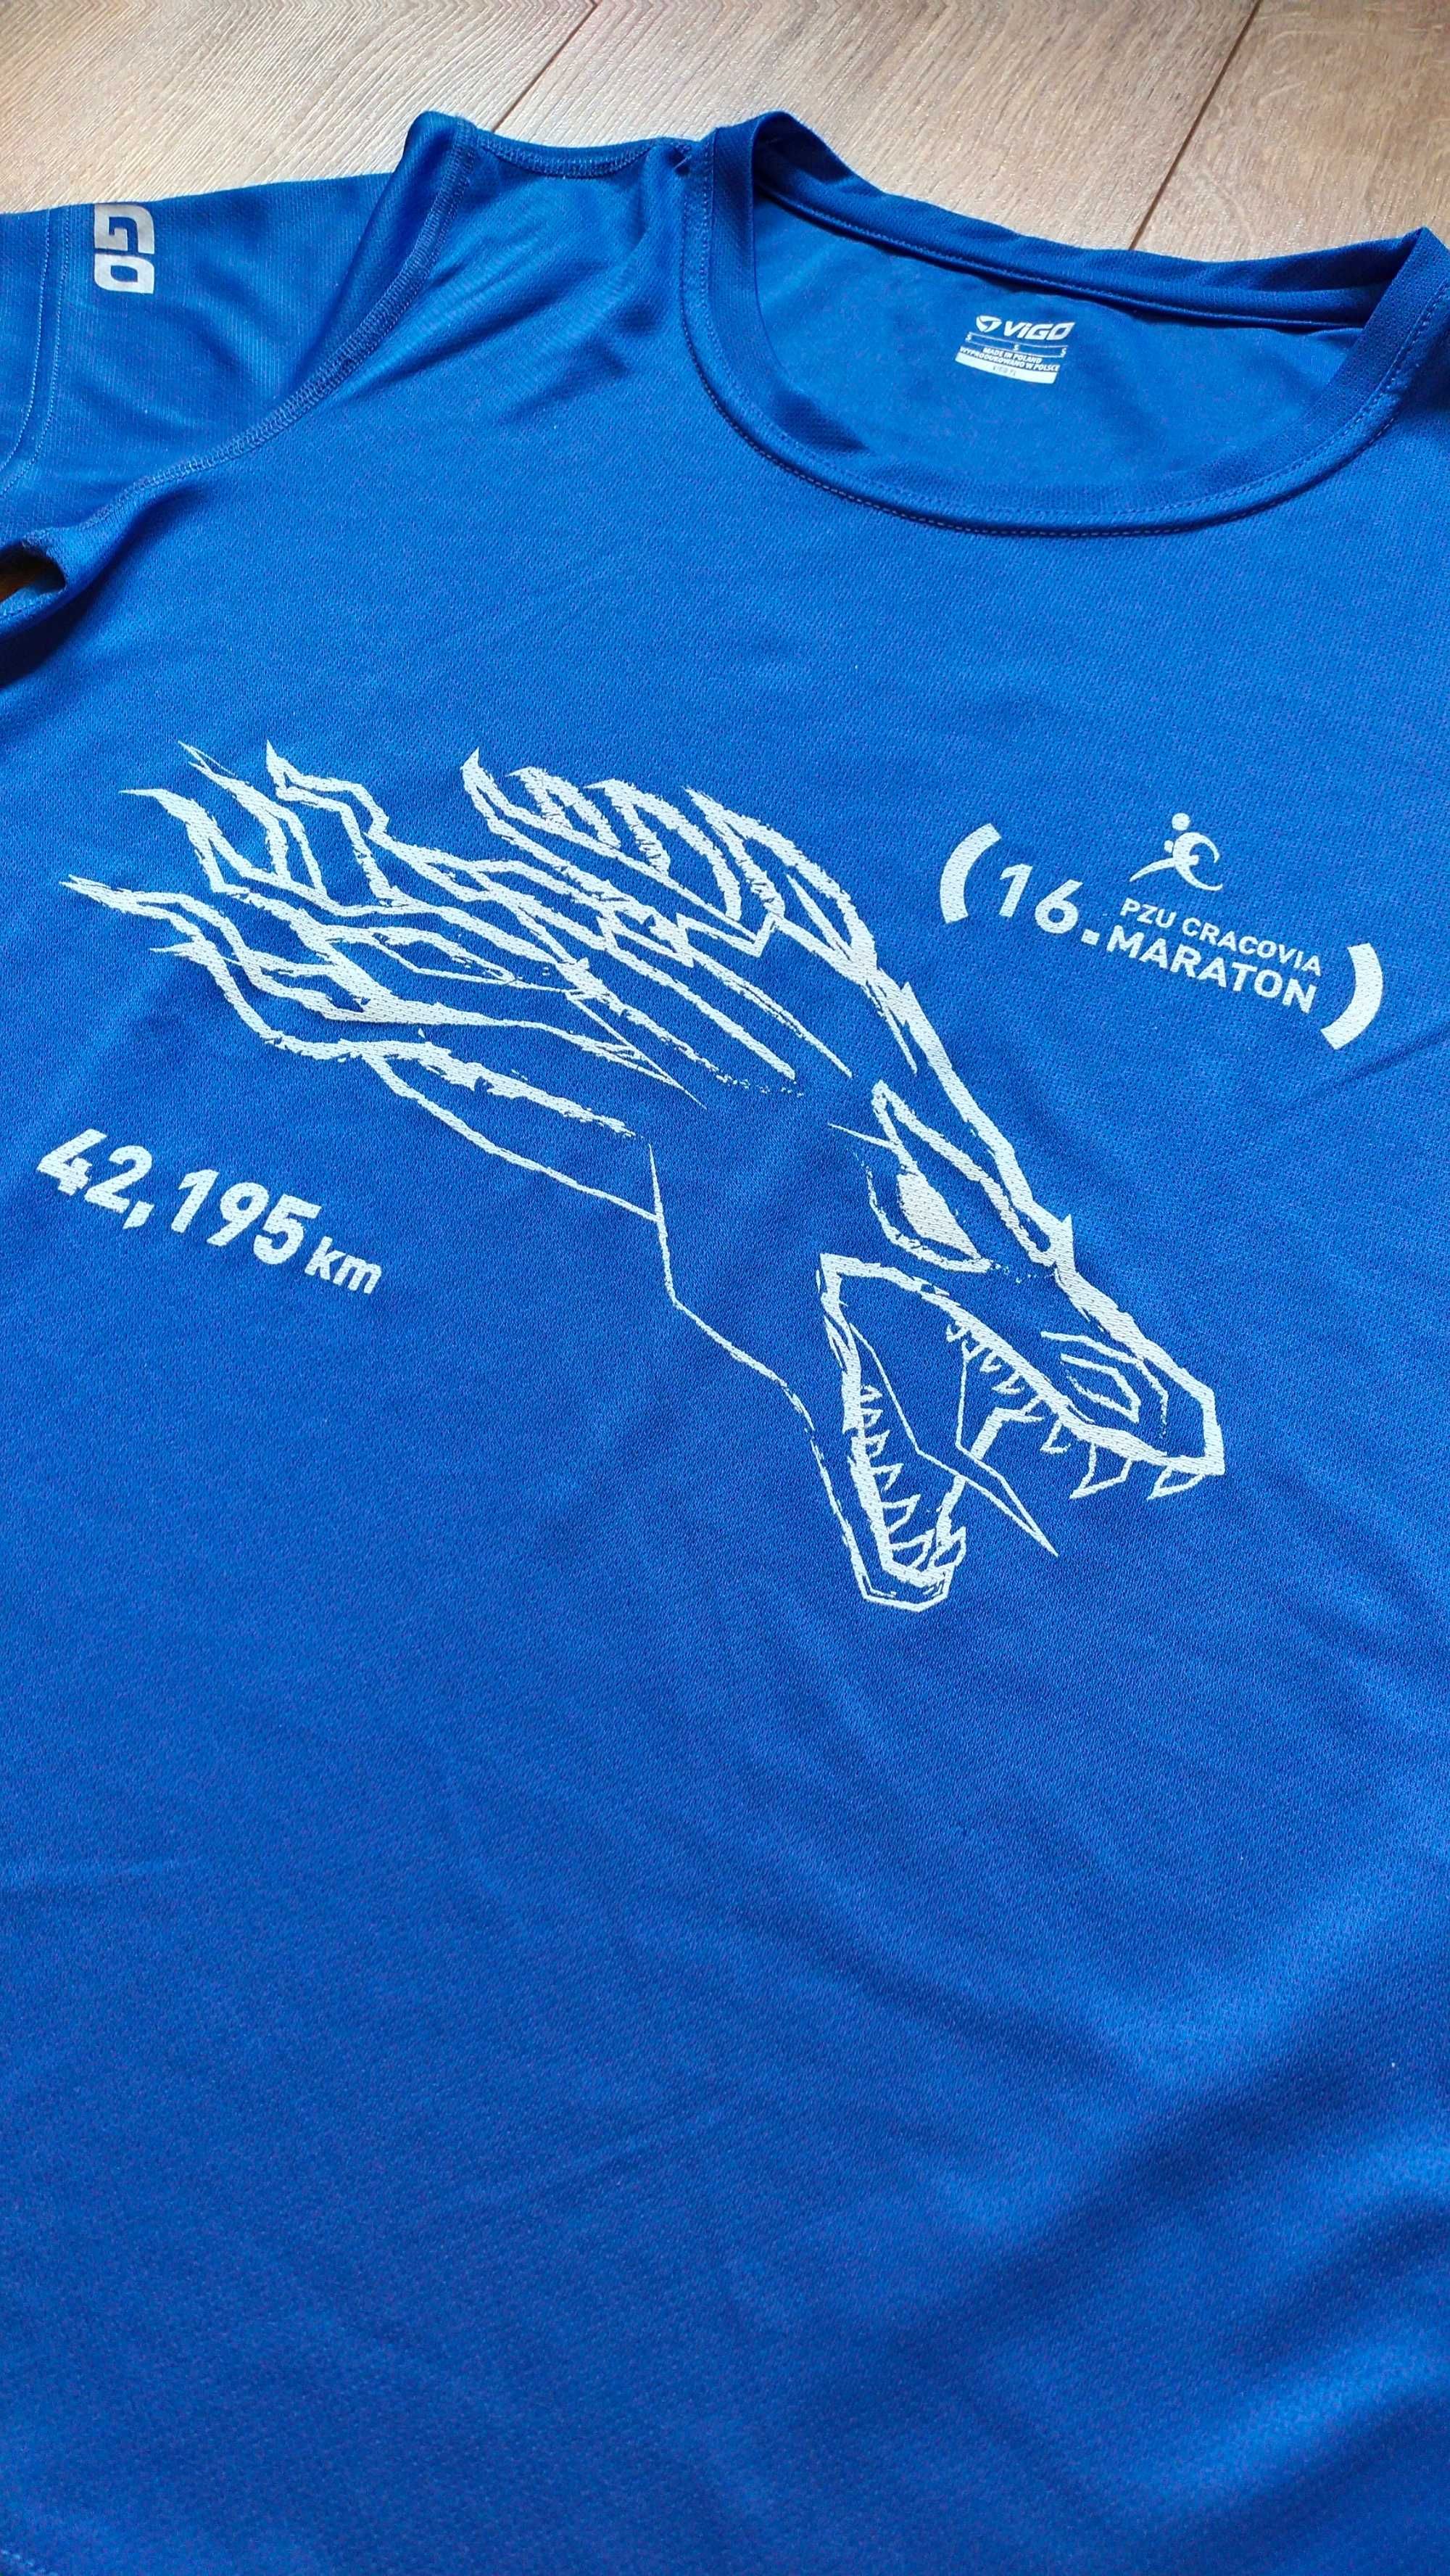 T-shirt damski / 16. PZU CRACOVIA Maraton